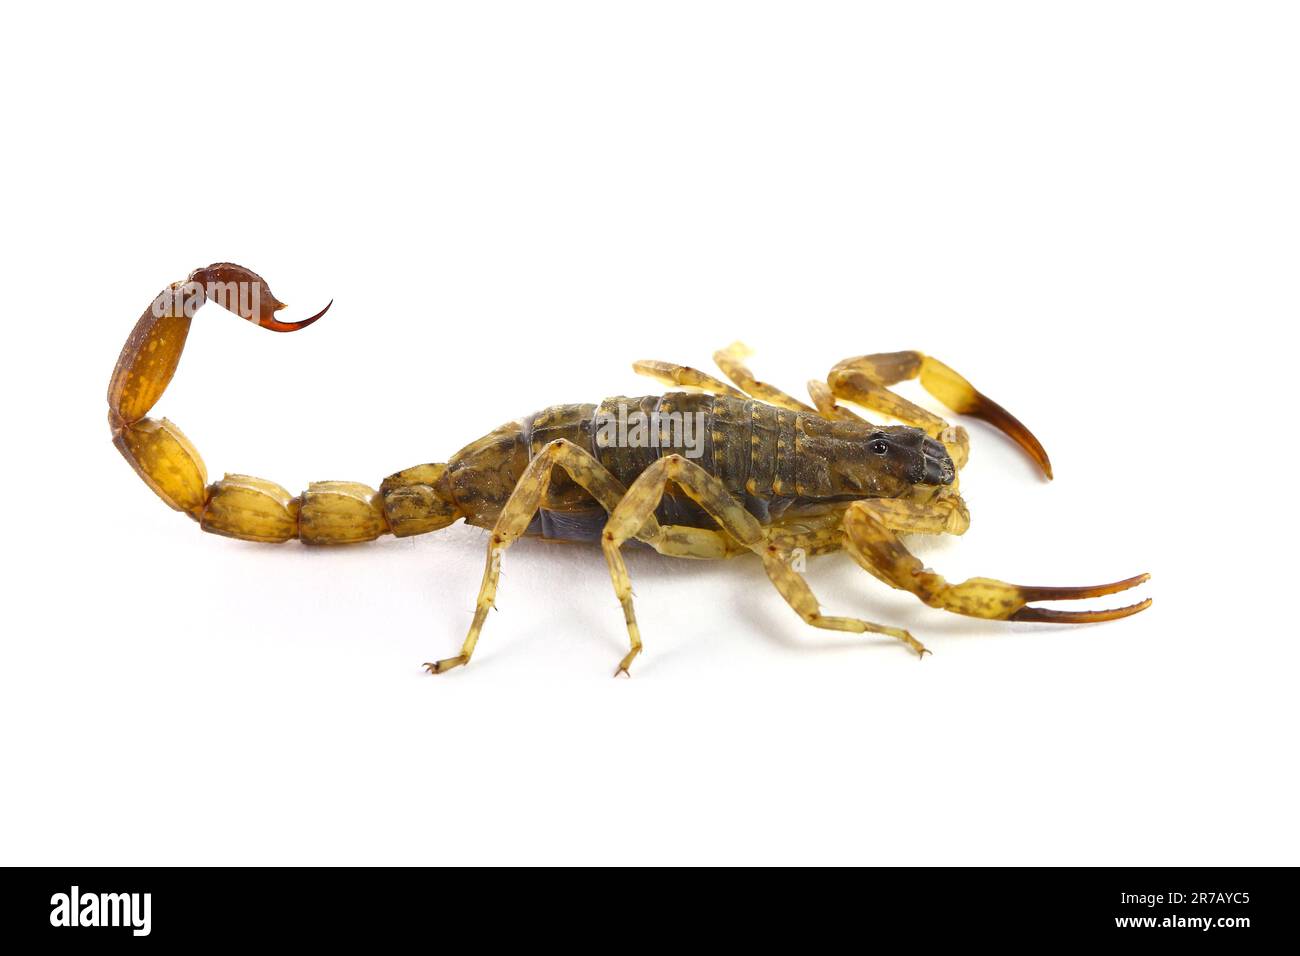 Chinese striped bark scorpion/Vietnamese brown scorpion (Lychas mucronatus) on white background Stock Photo